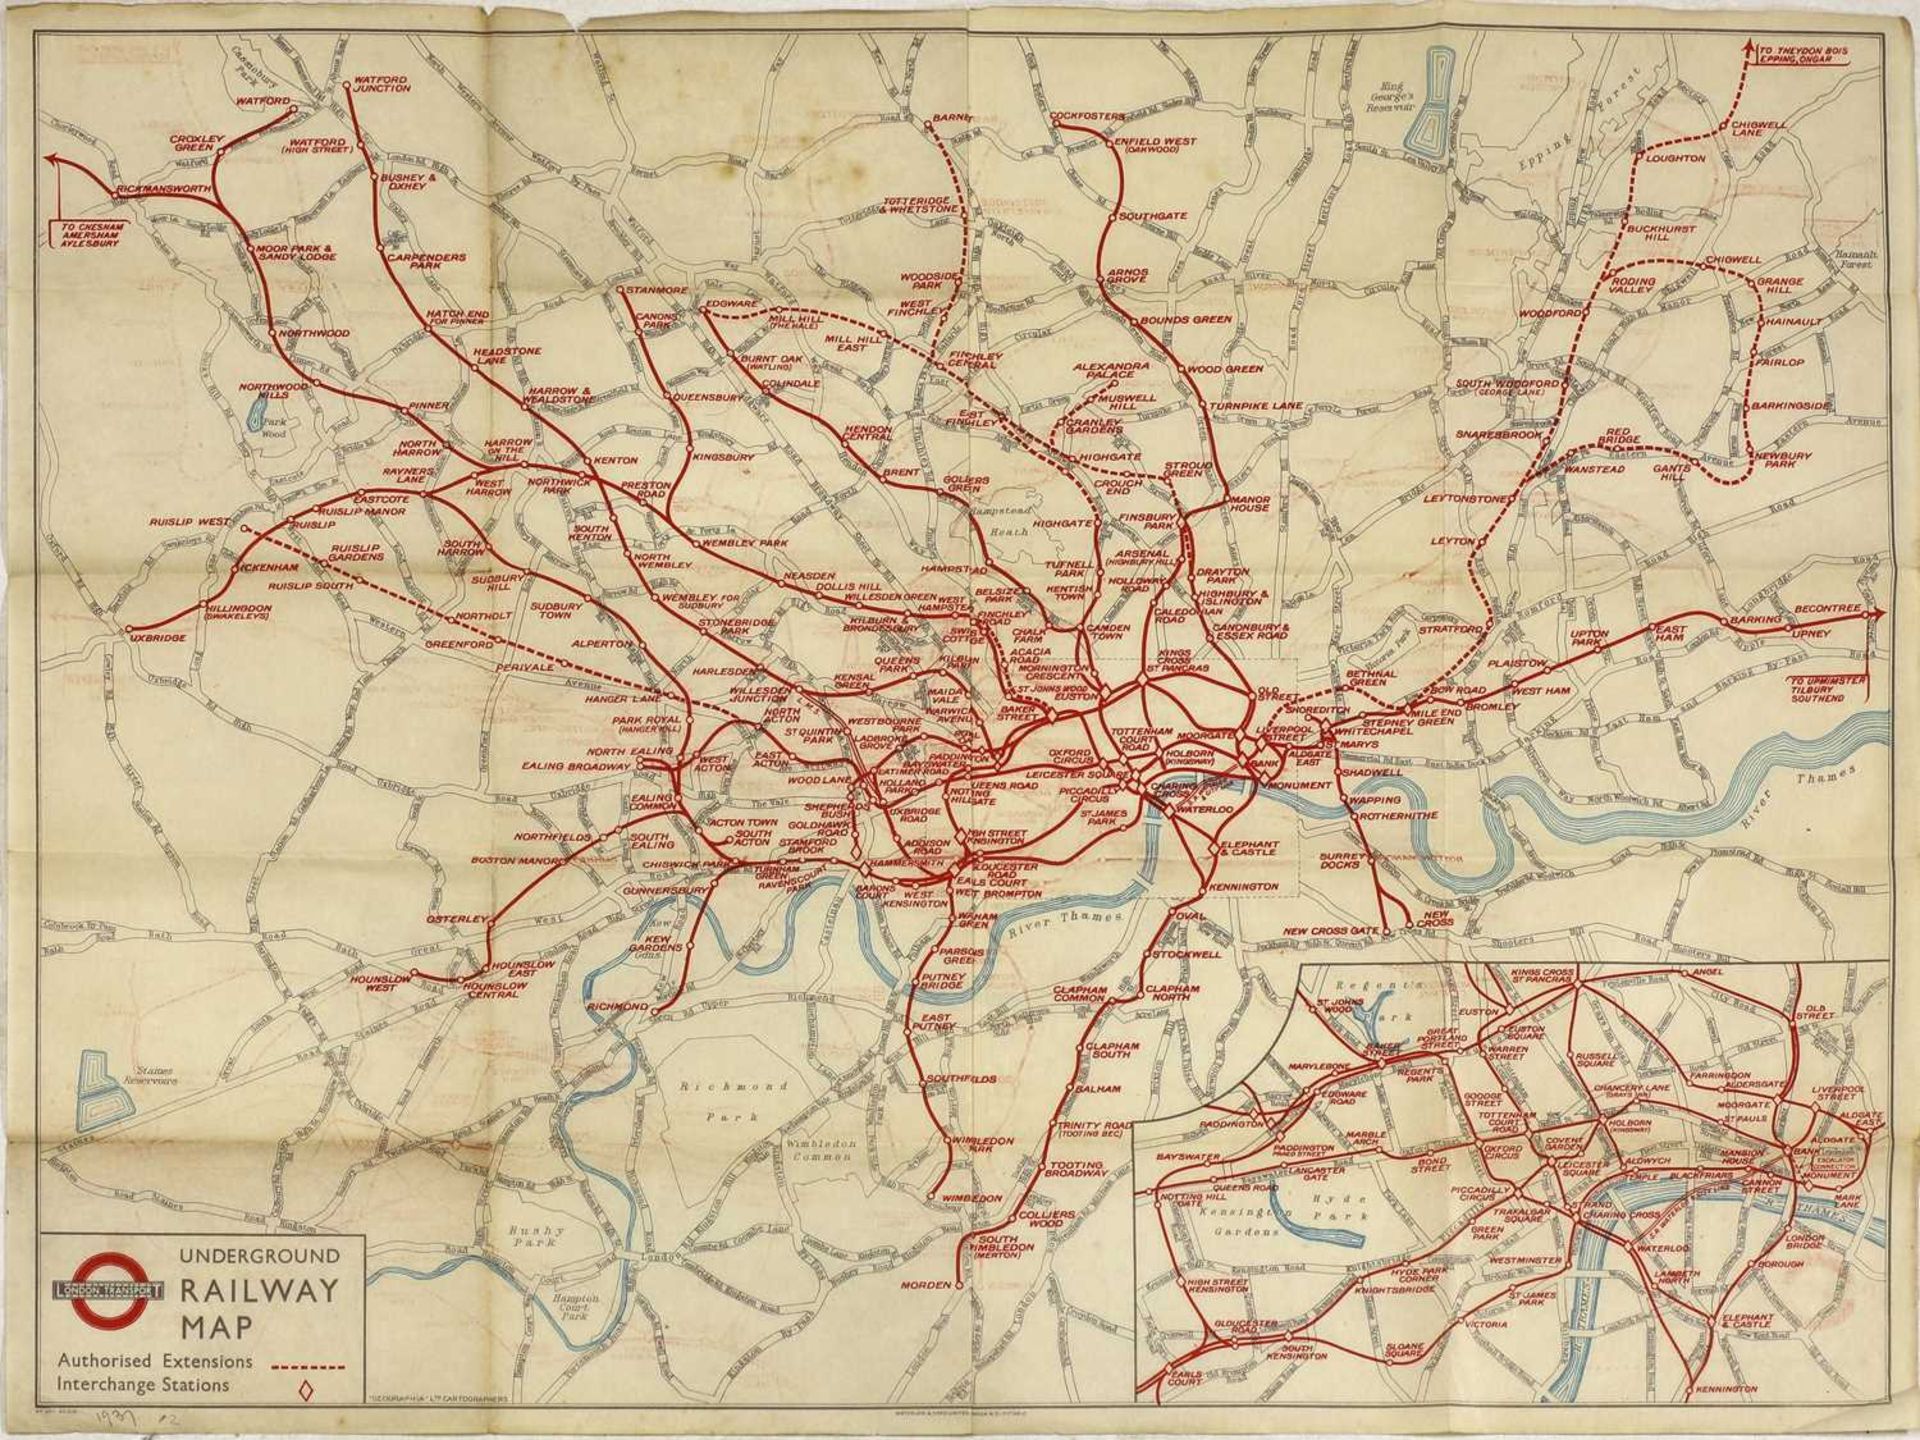 LONDON UNDERGROUND RAILWAY MAP 1937,